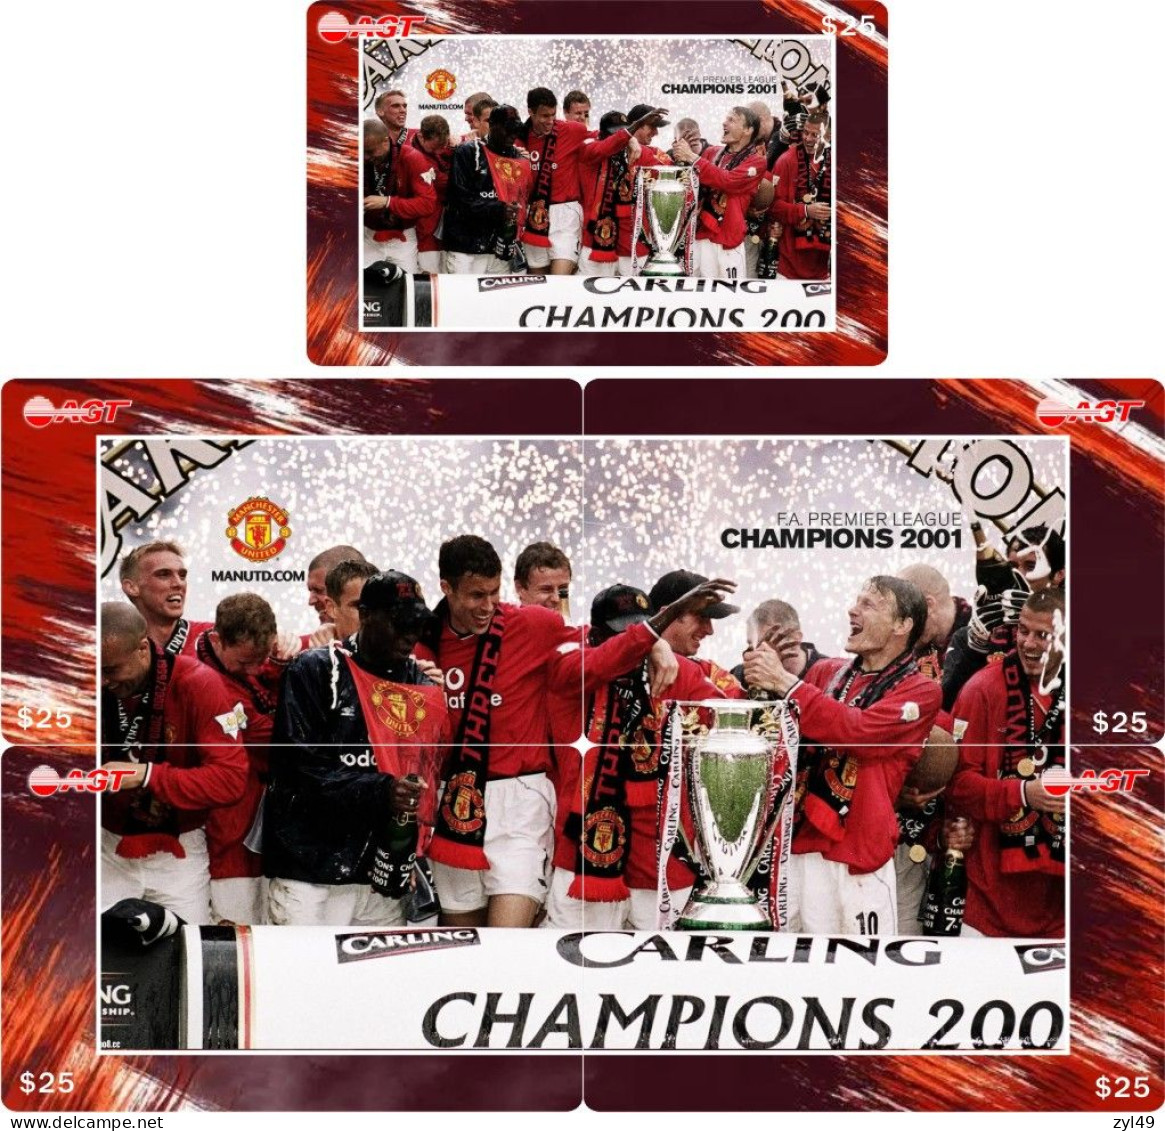 F13013 China phone cards Football Manchester United 100pcs